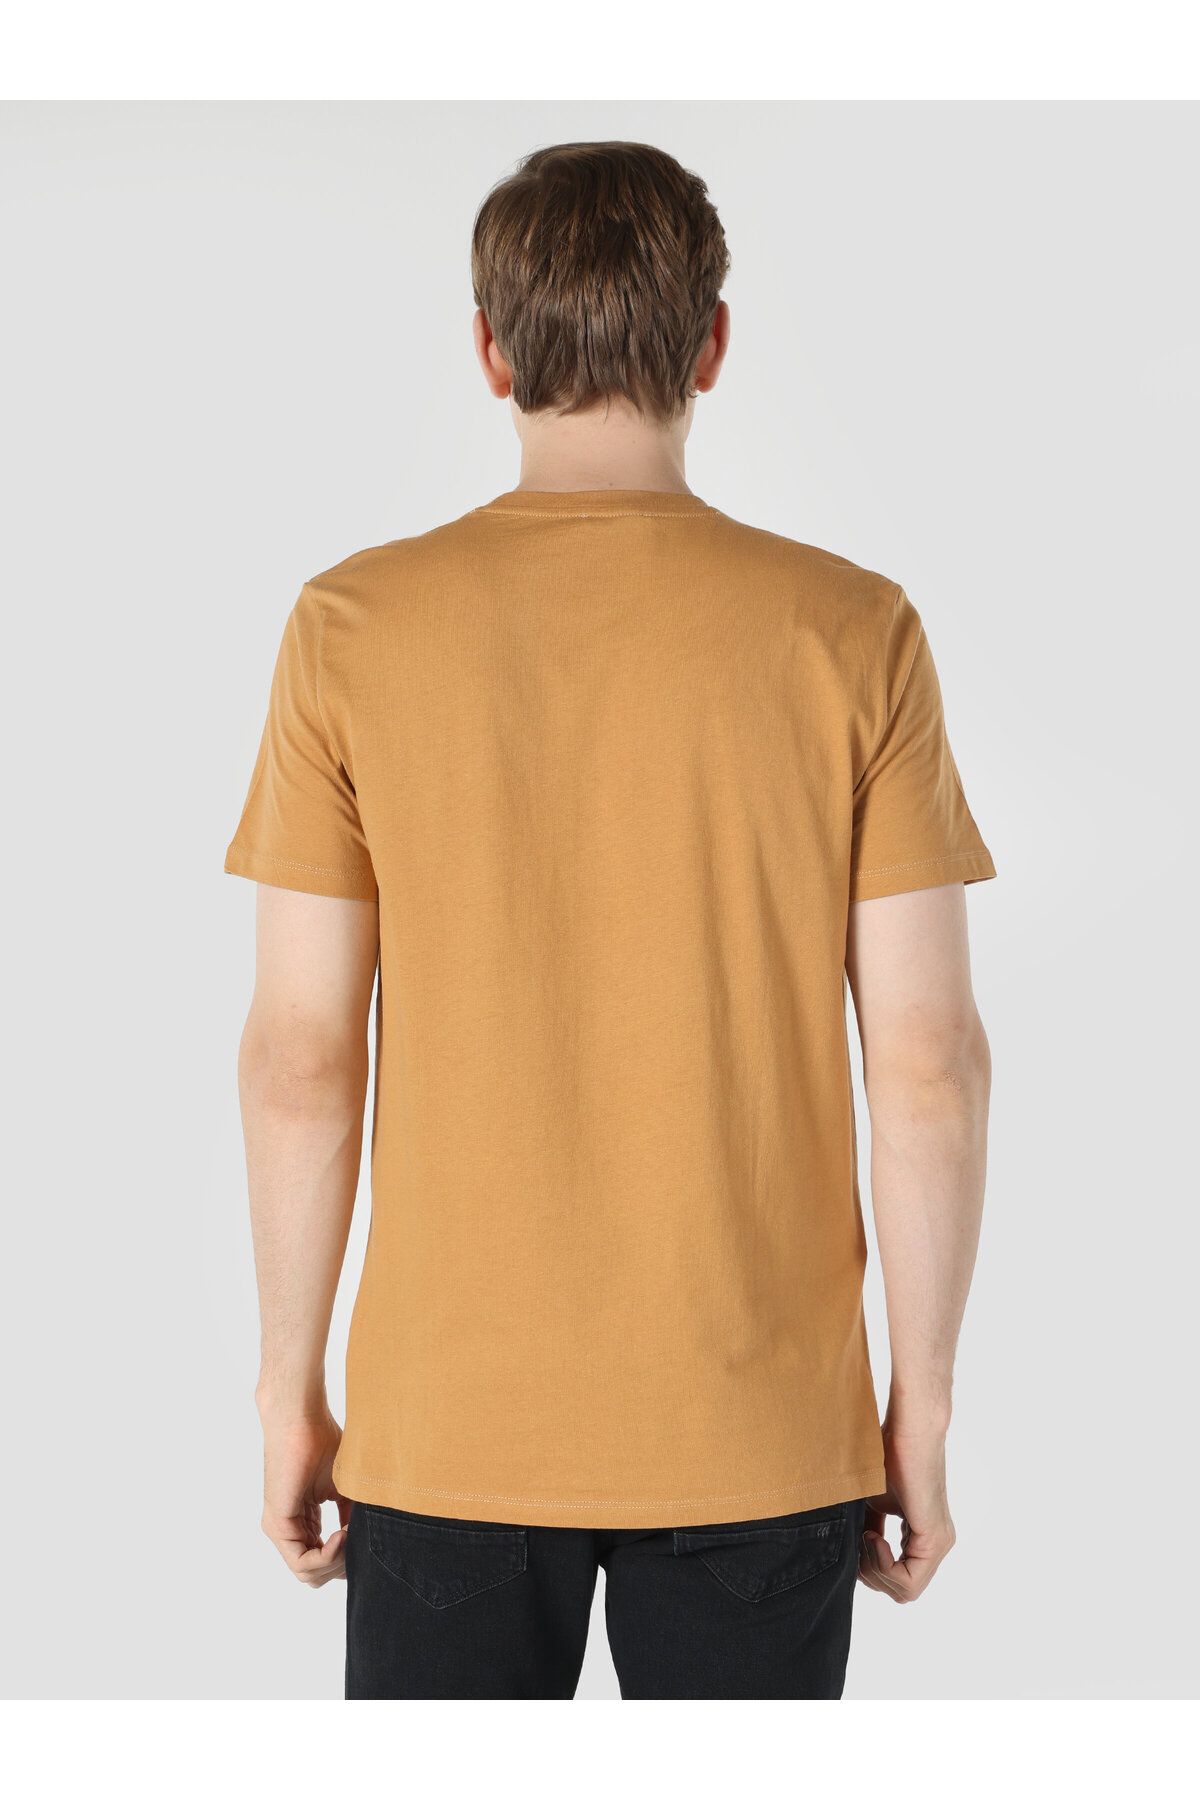 Colin’s یقه دوچرخه مناسب به طور منظم چاپ شده آستین کوتاه مردانه قهوه ای T shirt